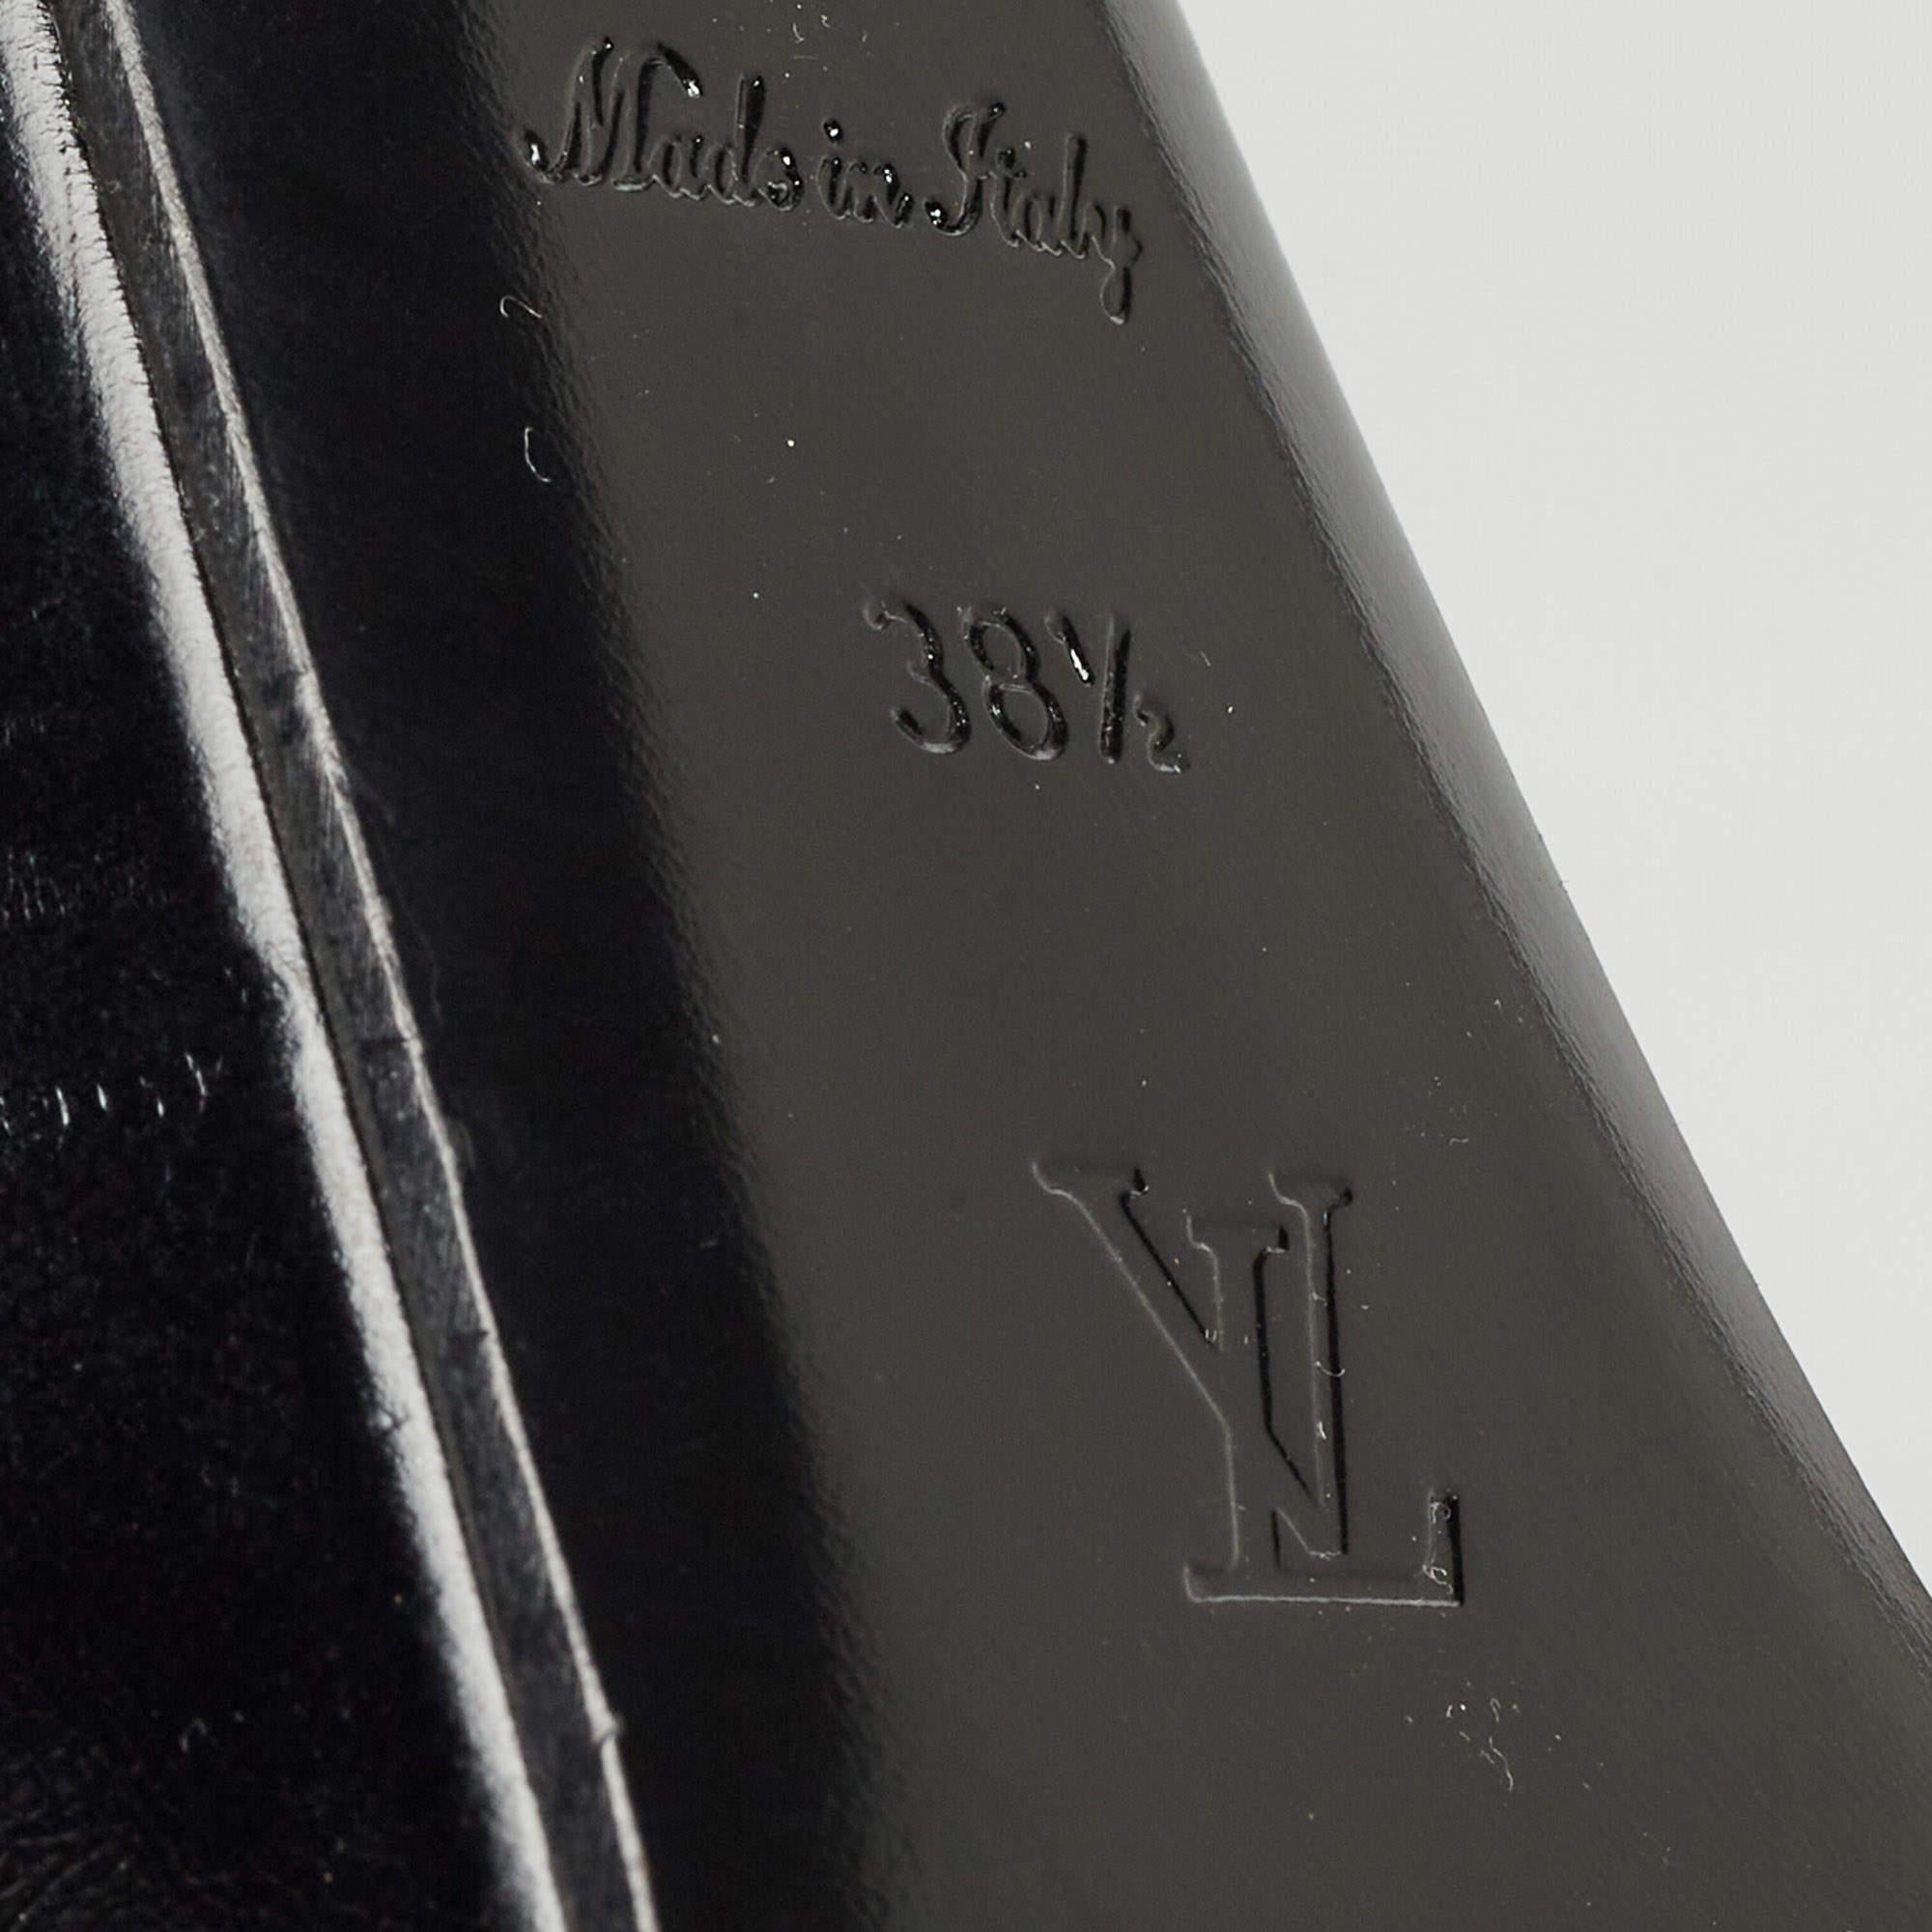 Louis Vuitton Black Leather Studded Fame Sandals Size 38.5 1